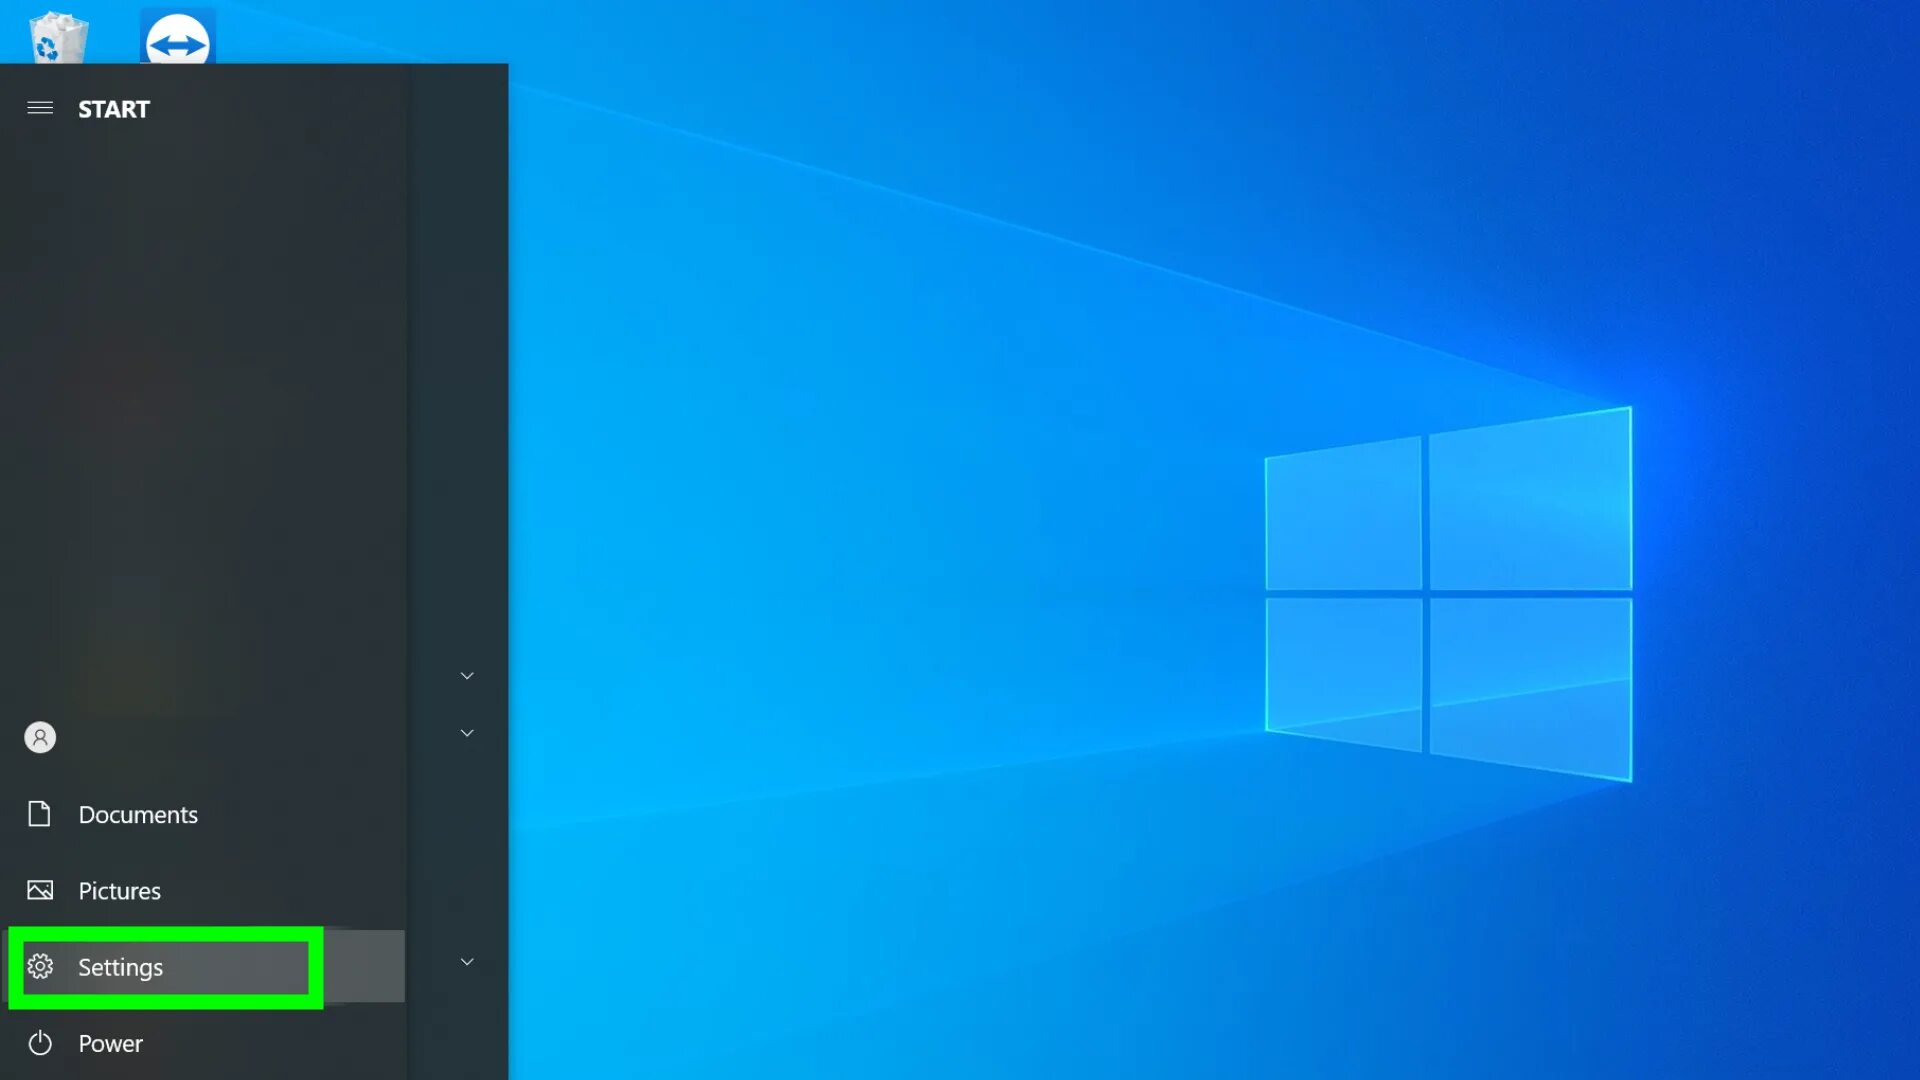 Windows 10 Enterprise 20h2. Win 10 Pro 20h2. Ноутбук на виндовс 10 64 бит. • ОС Microsoft Windows 10 Pro.